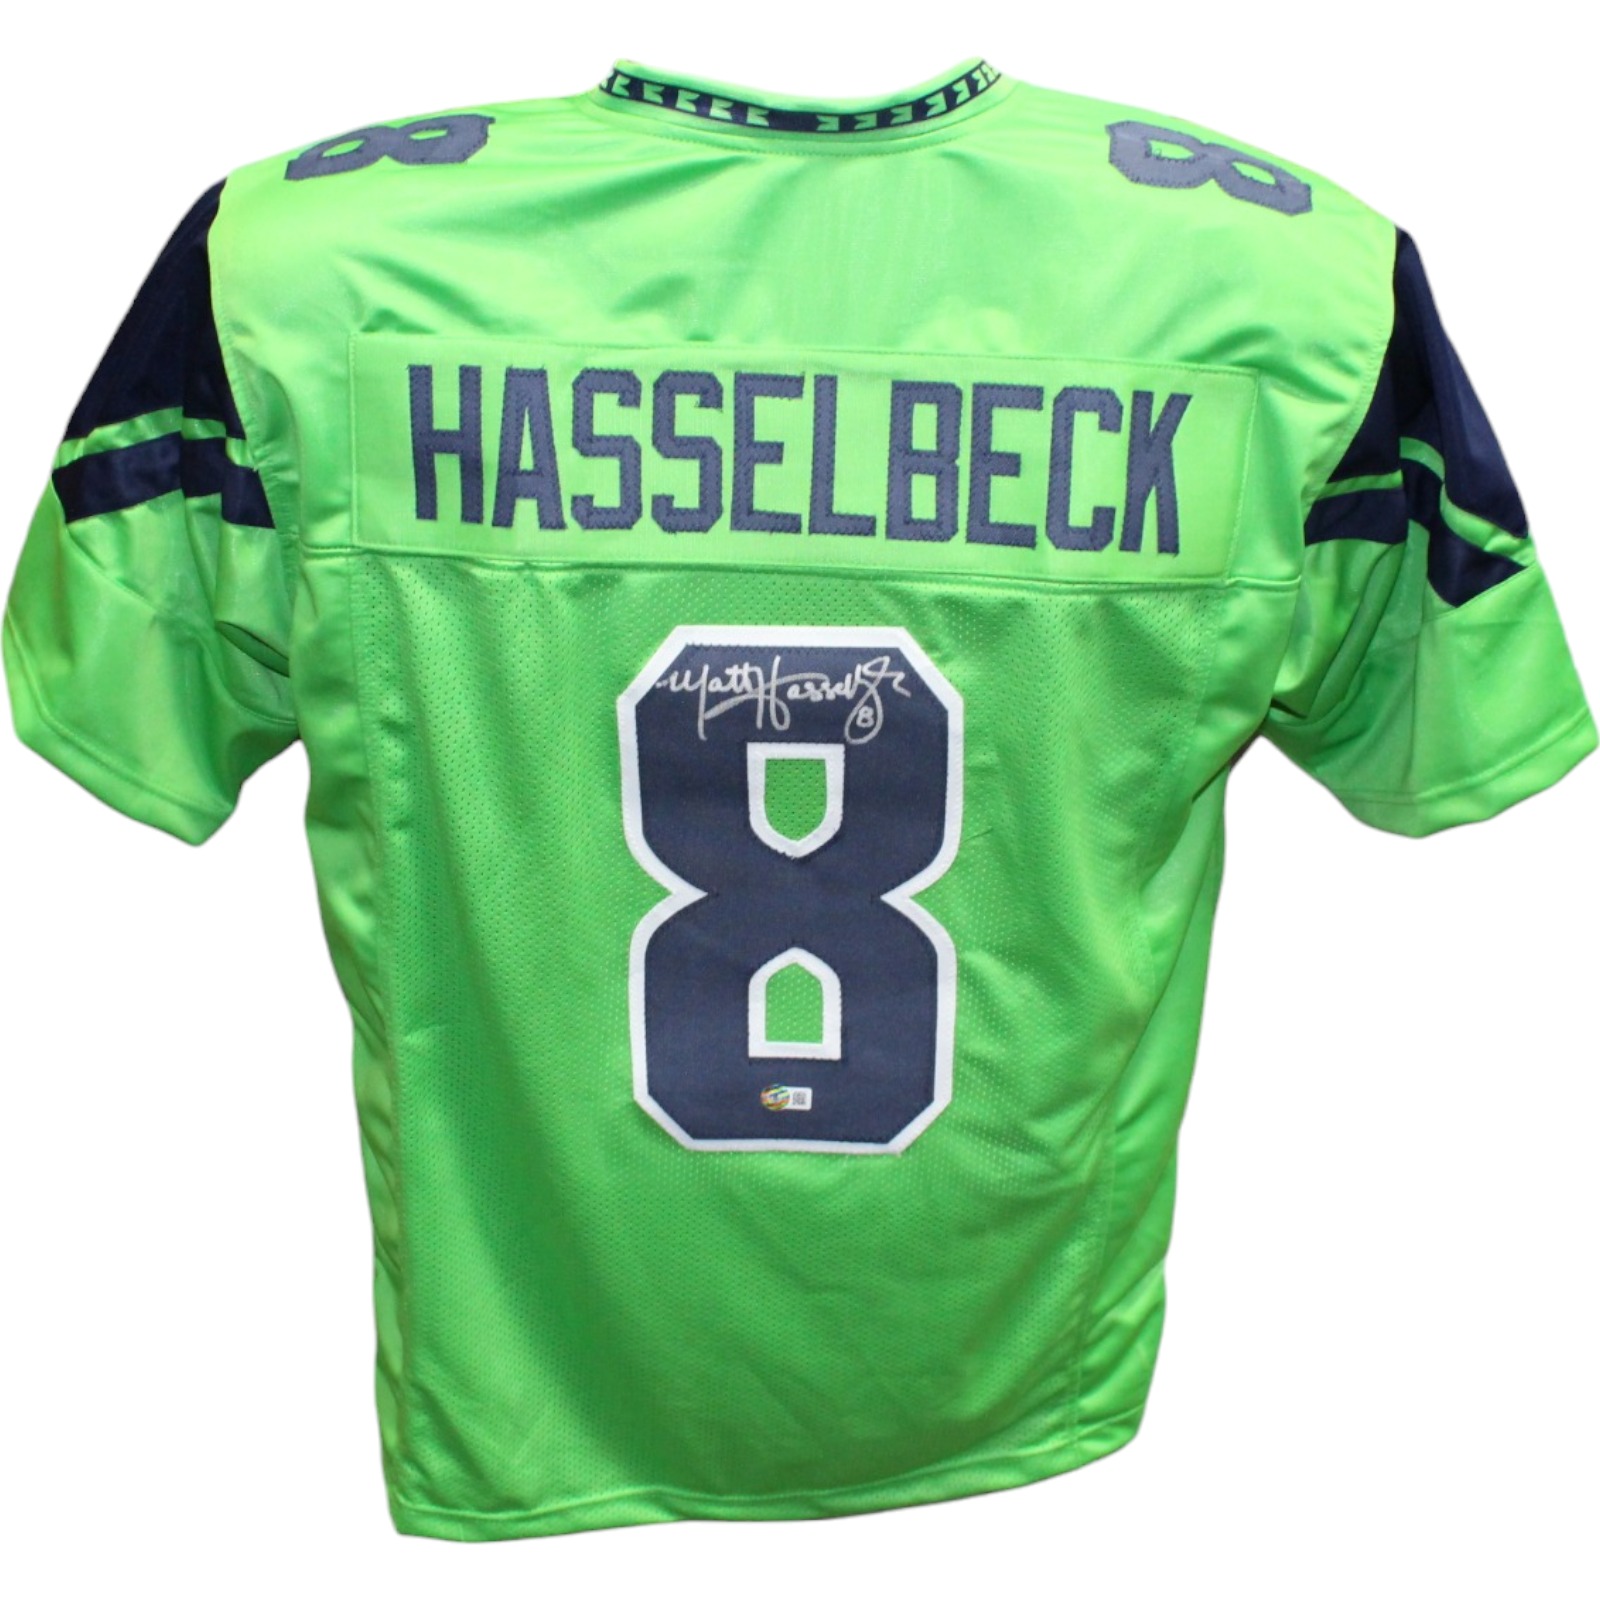 Matt Hasselbeck Autographed/Signed Pro Style Green Jersey Beckett